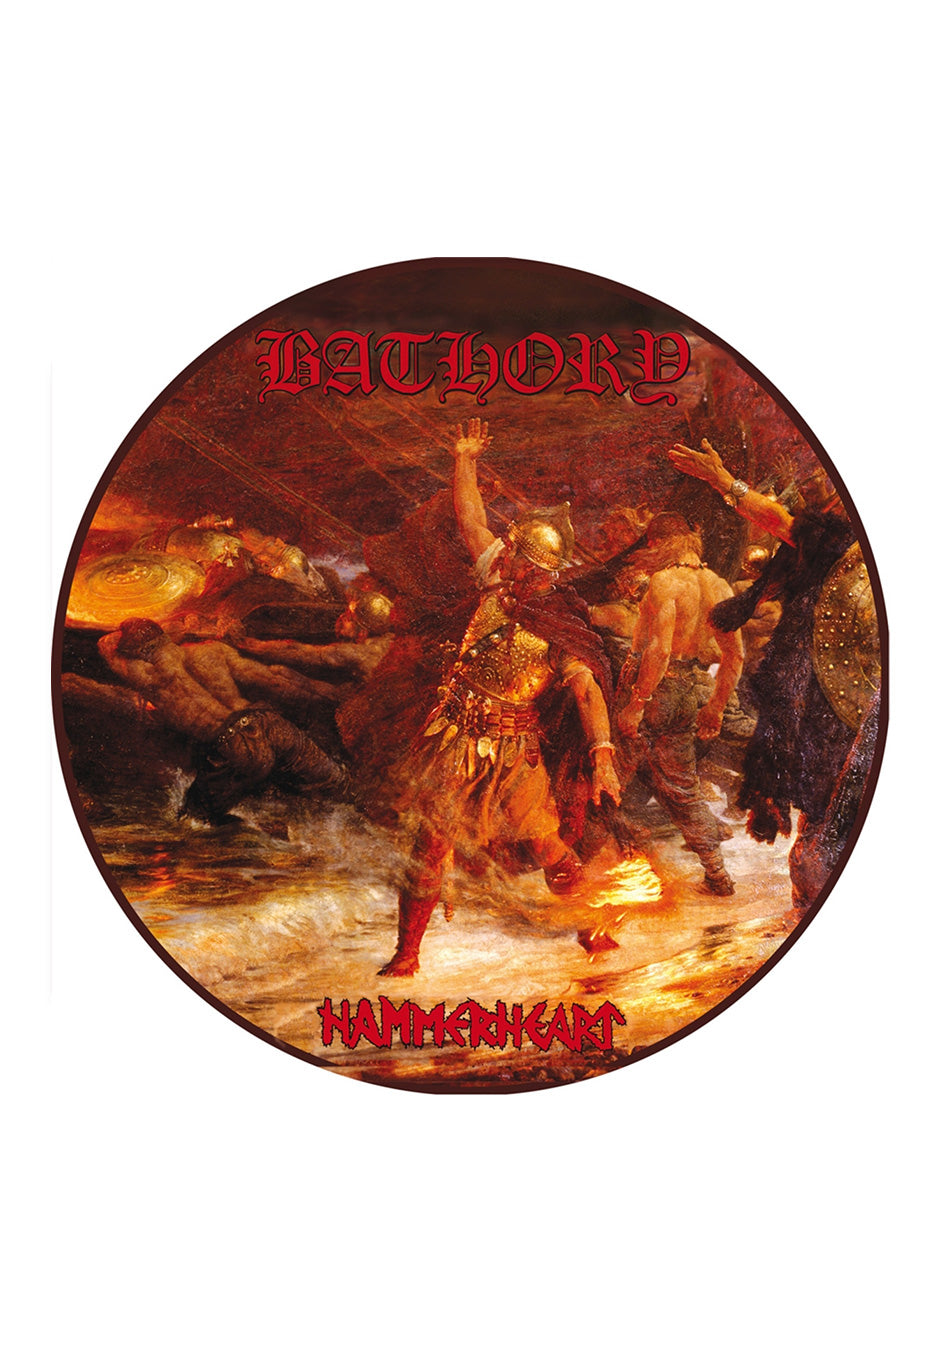 Bathory - Hammerheart - Picture Vinyl